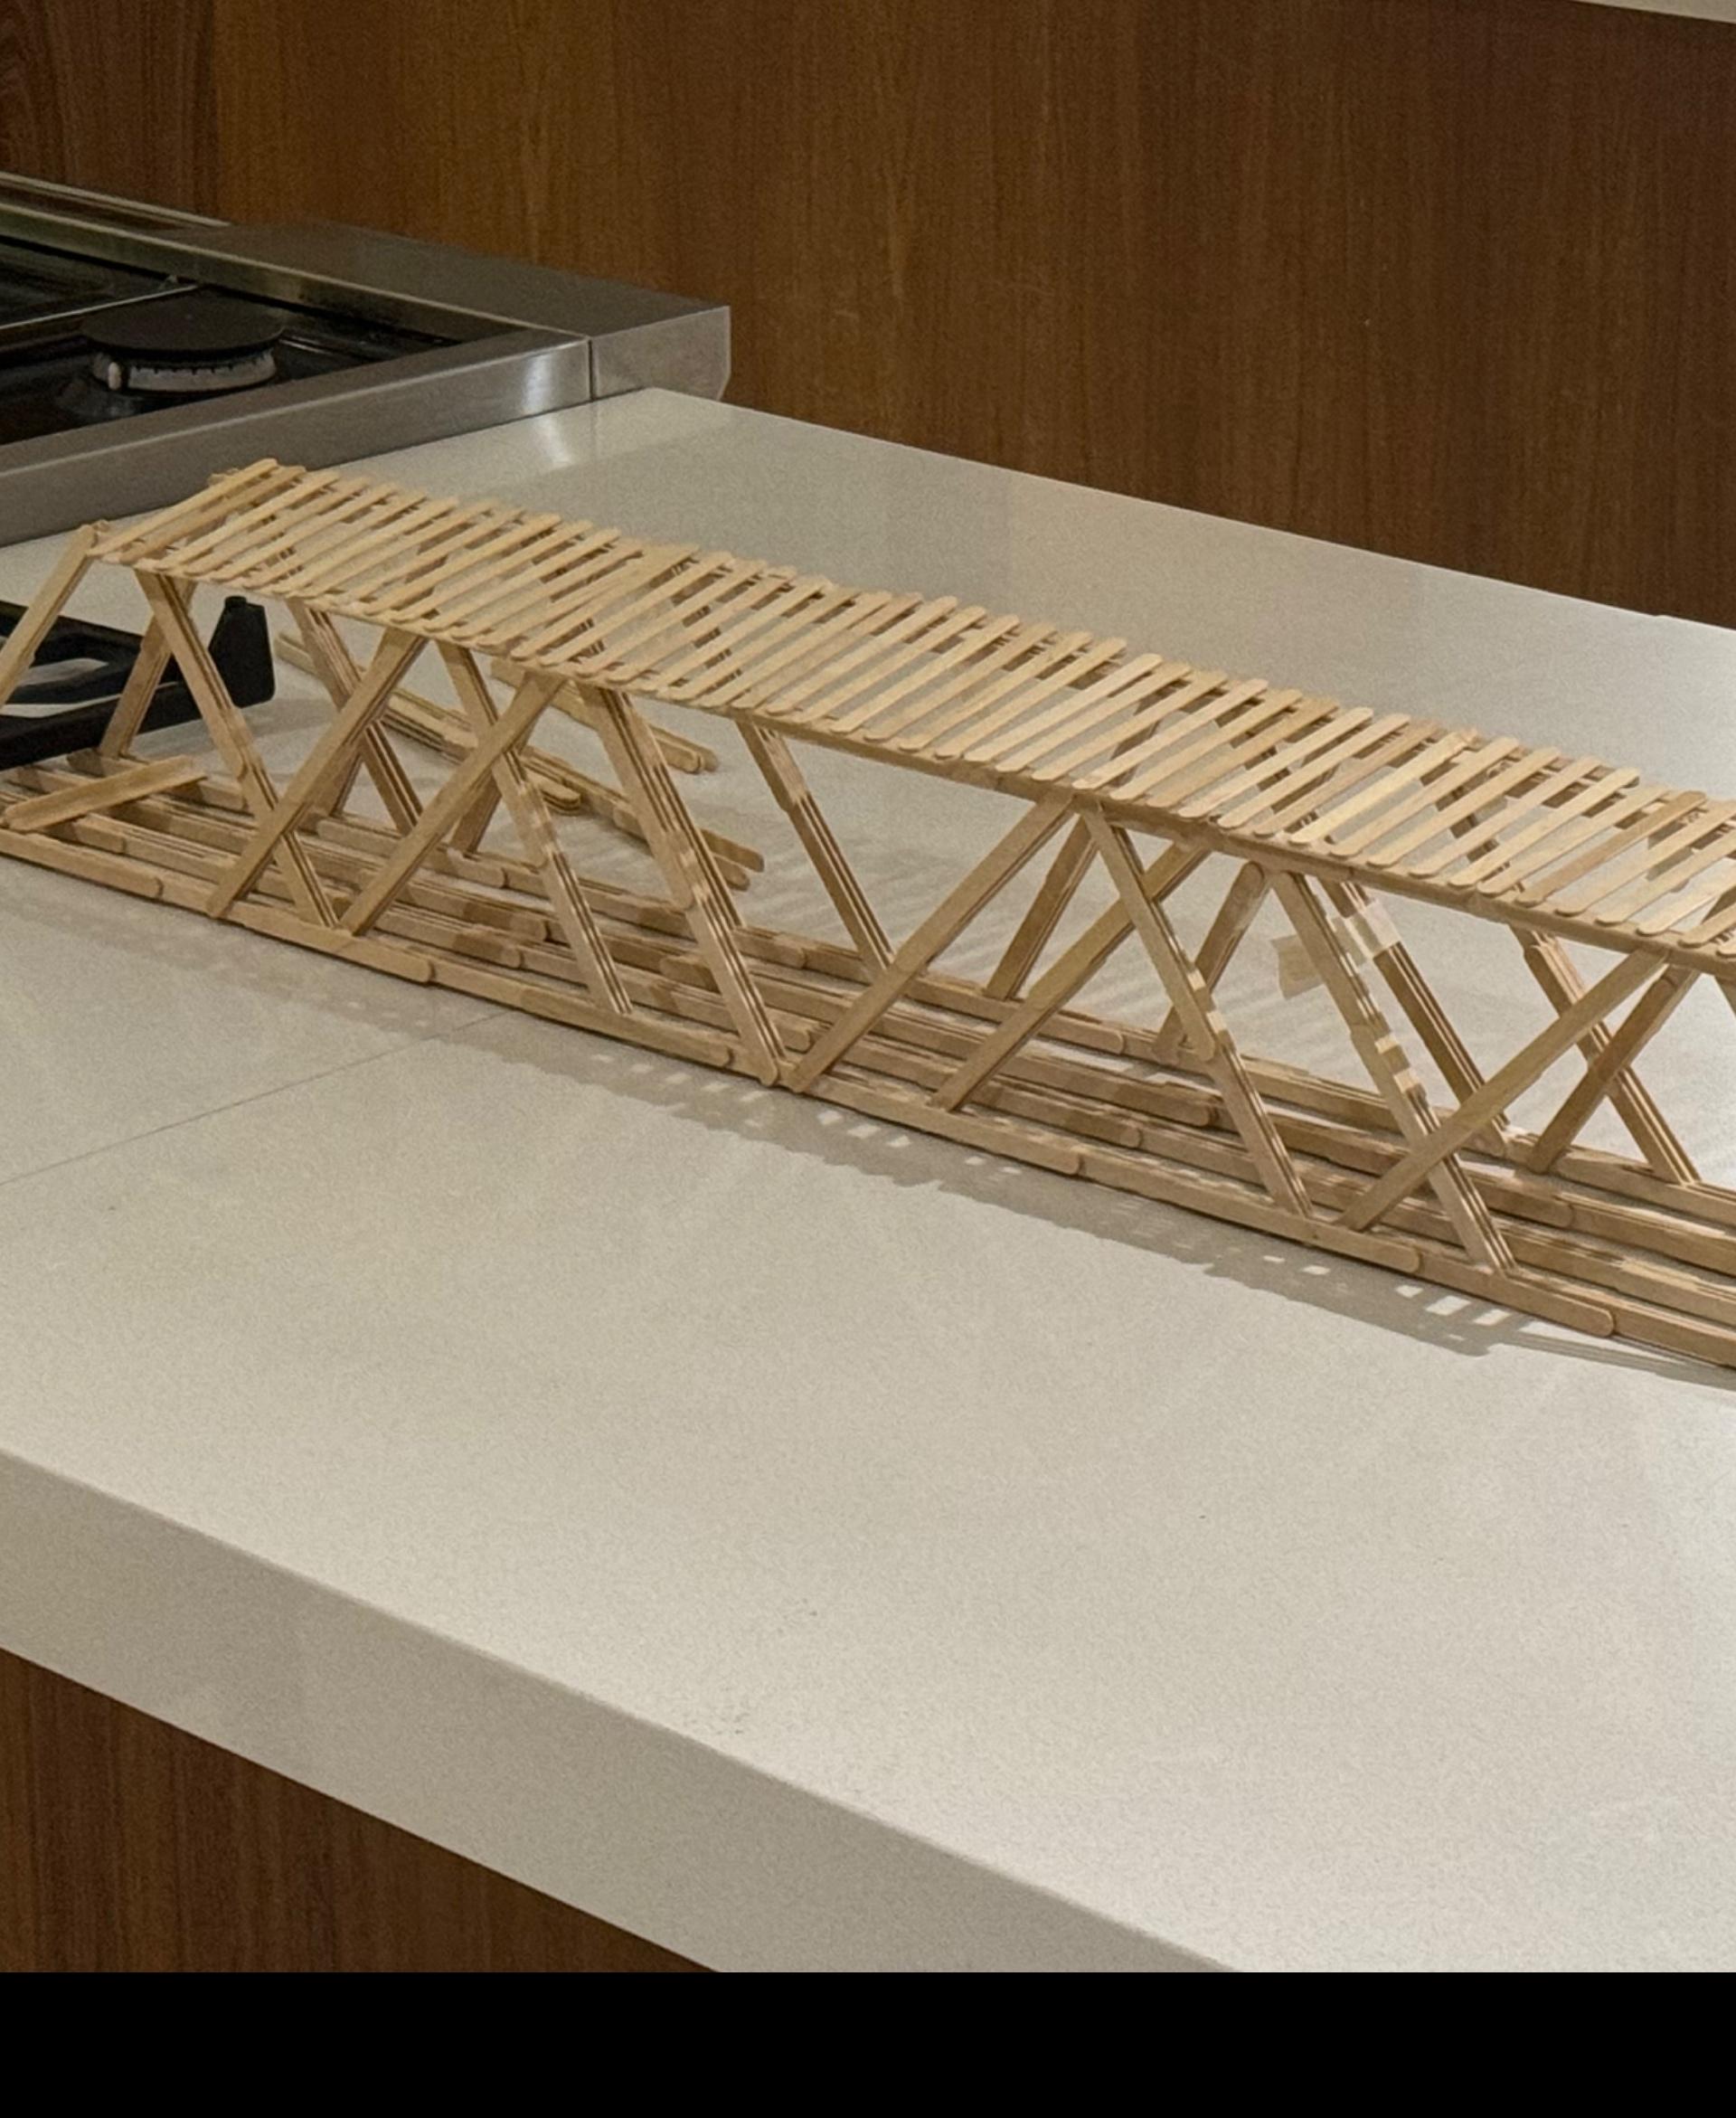 Popsicle Stick Bridge 3d model